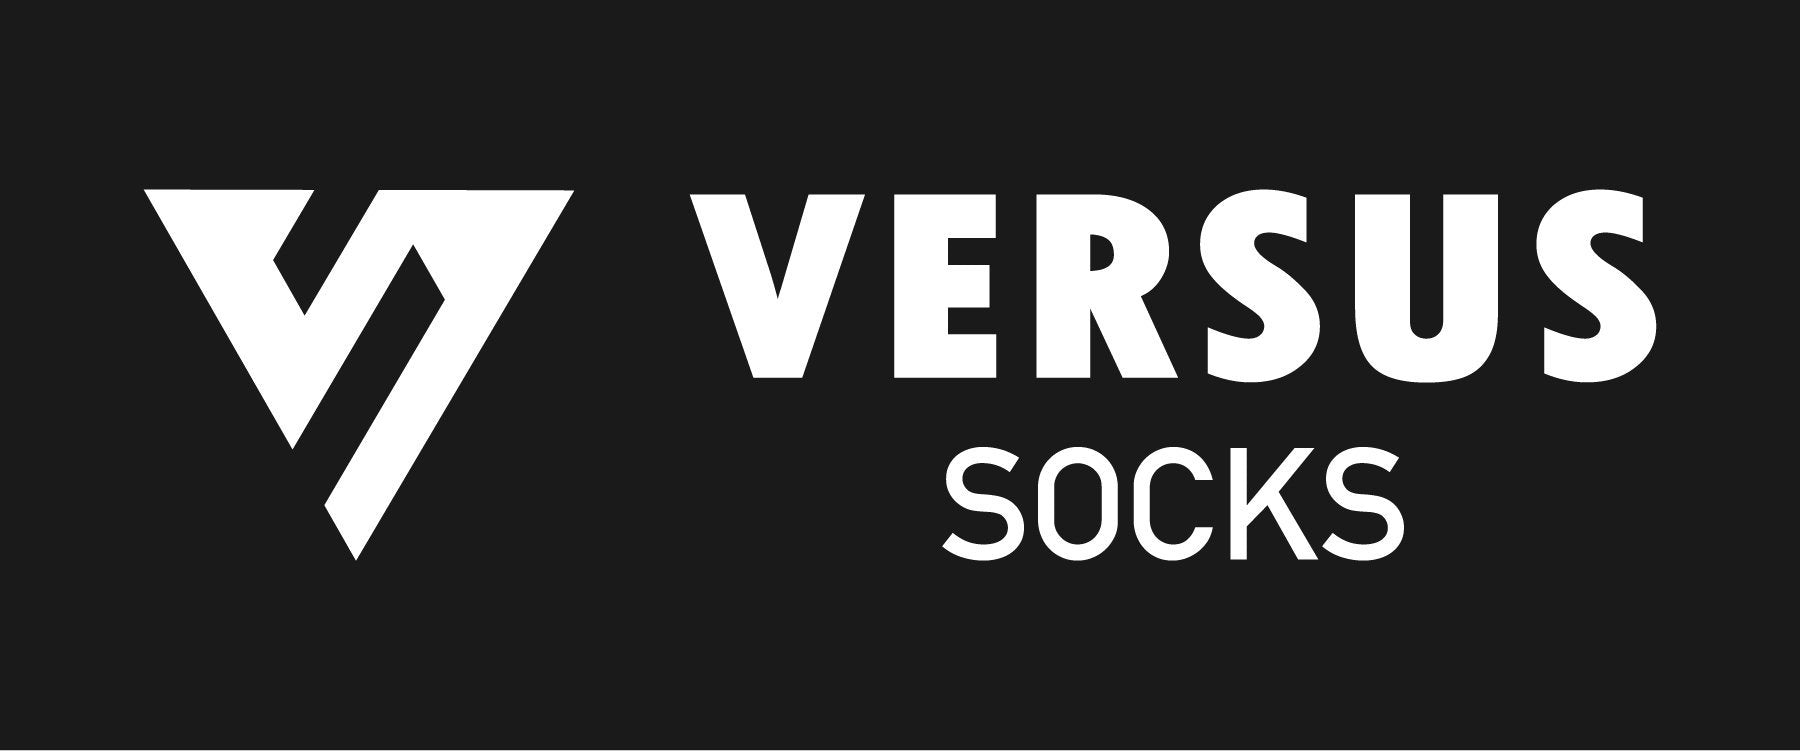 Versus Socks B2B Portal